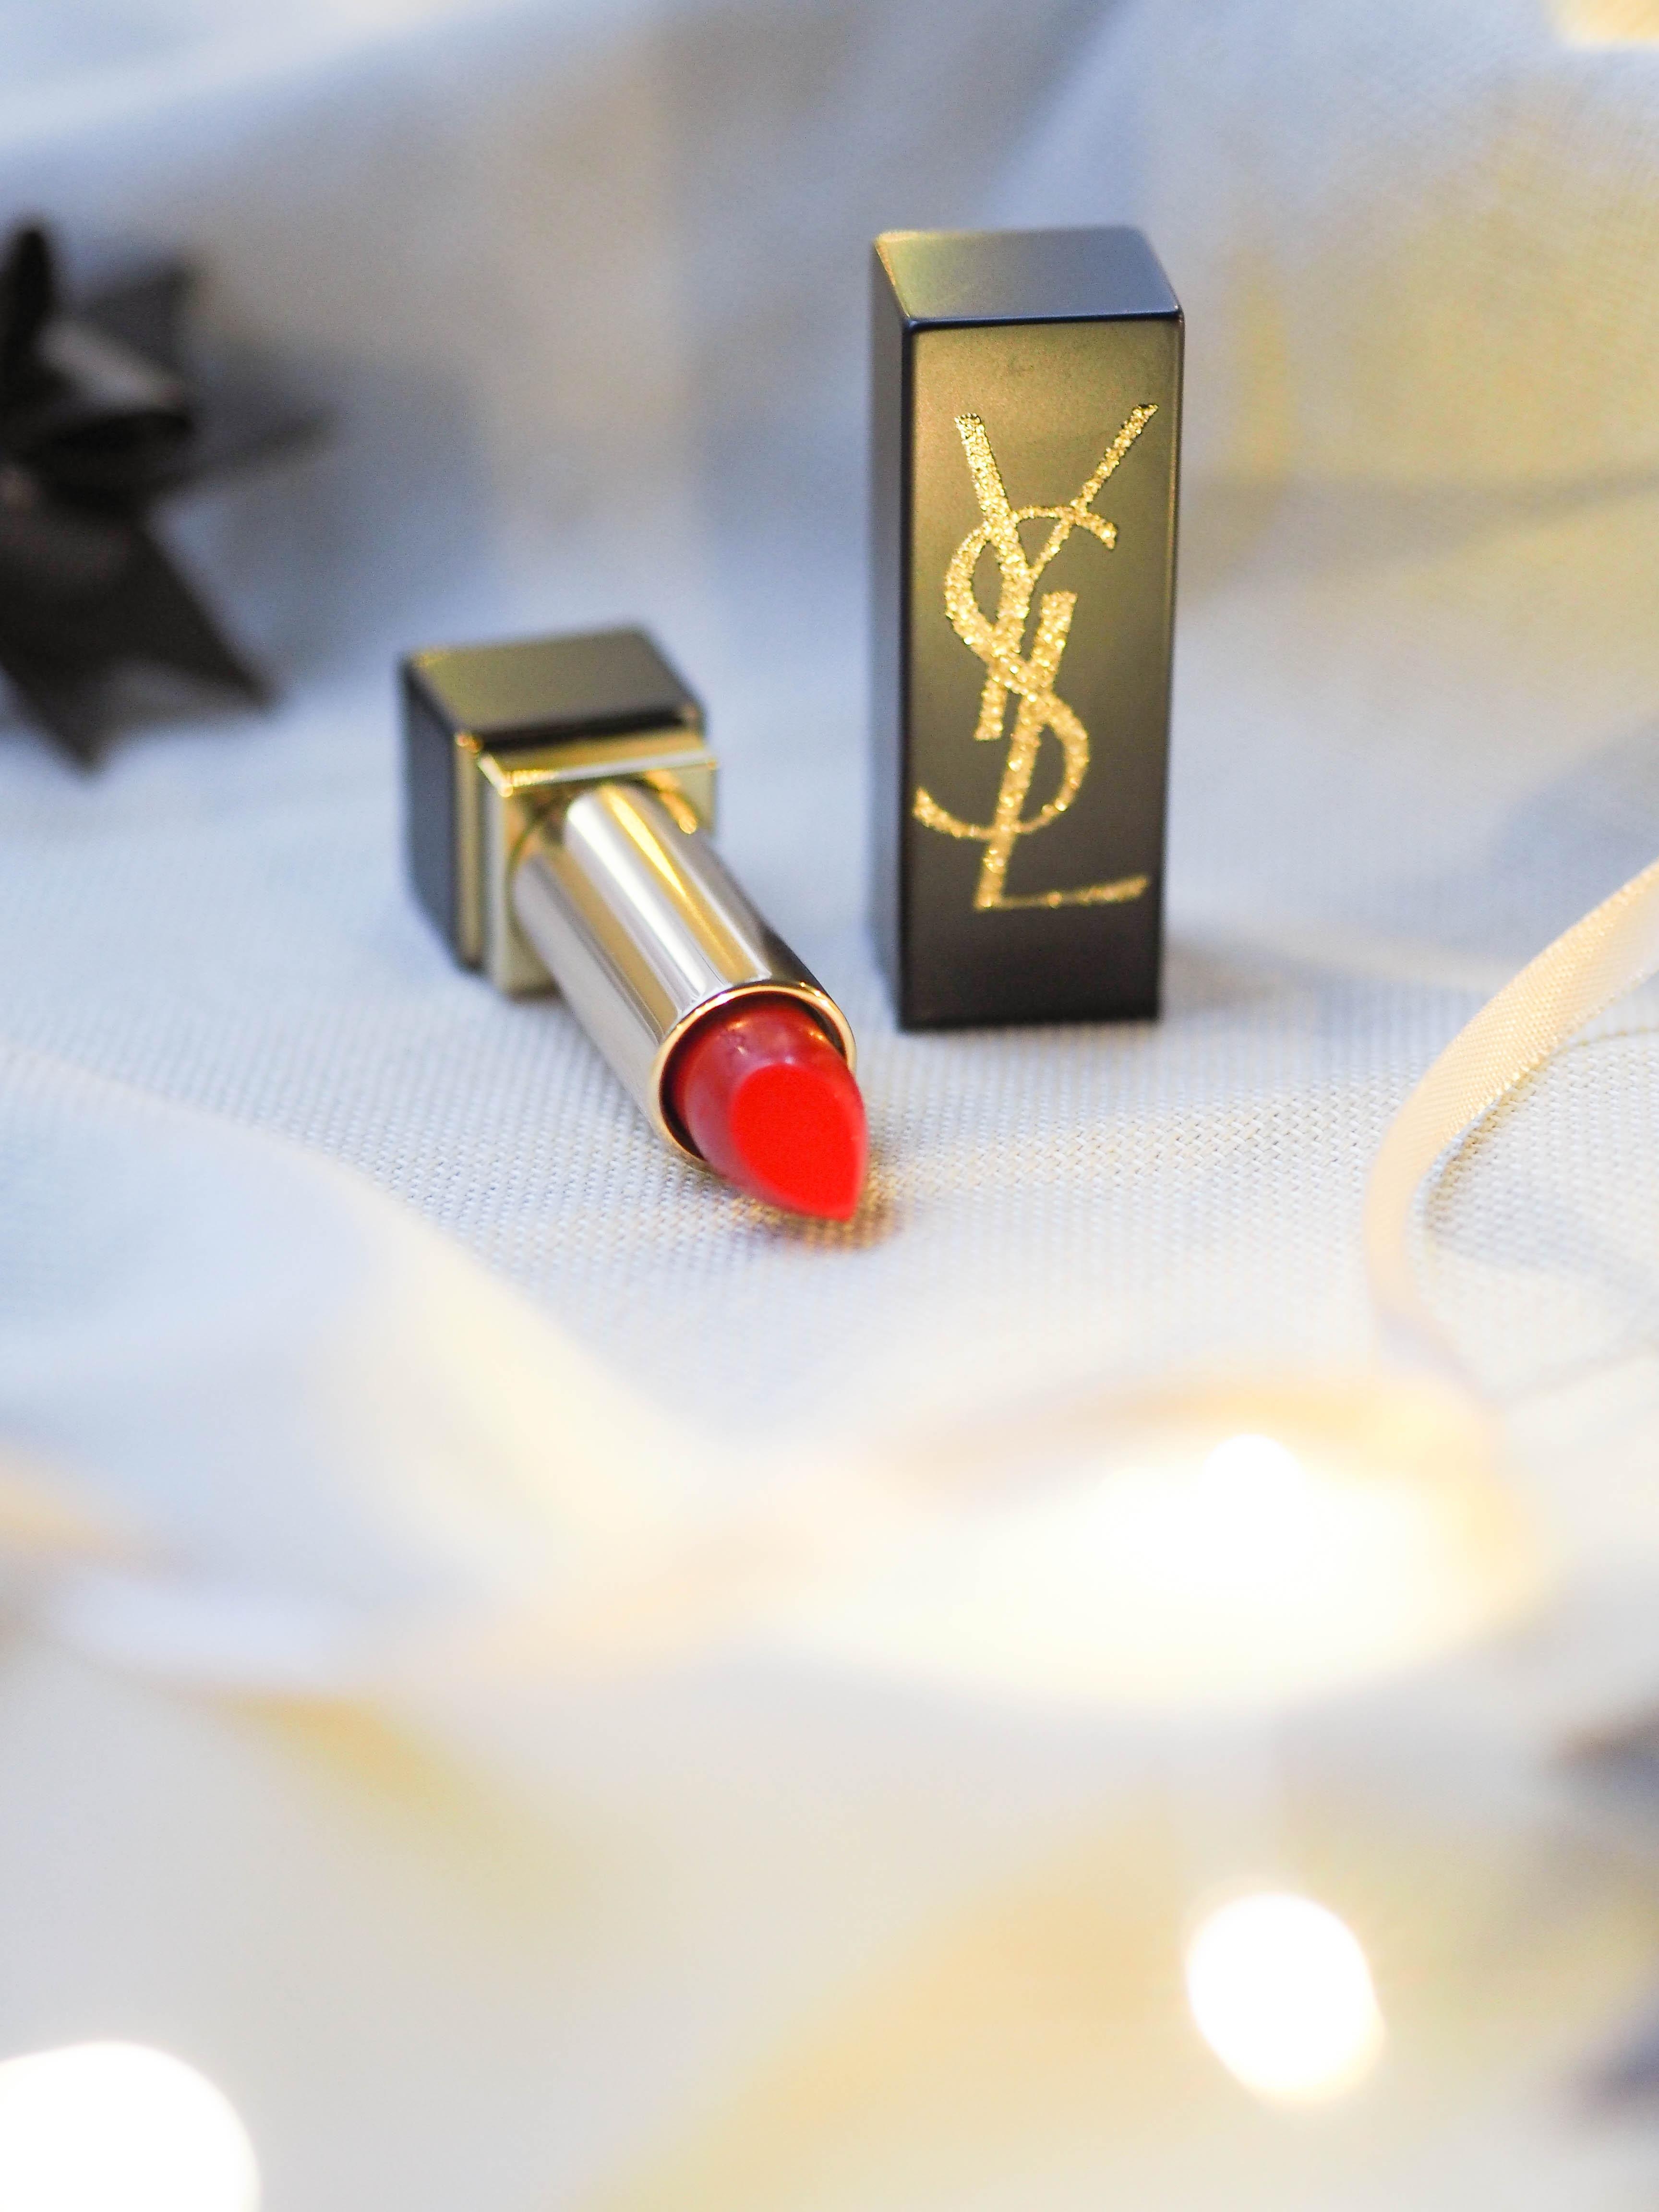 Klassiker schenken geht immer: "Rouge Pur" im Weihnachtsmantel von Yves Saint Laurent #beautylieblinge #yvessaintlaurent